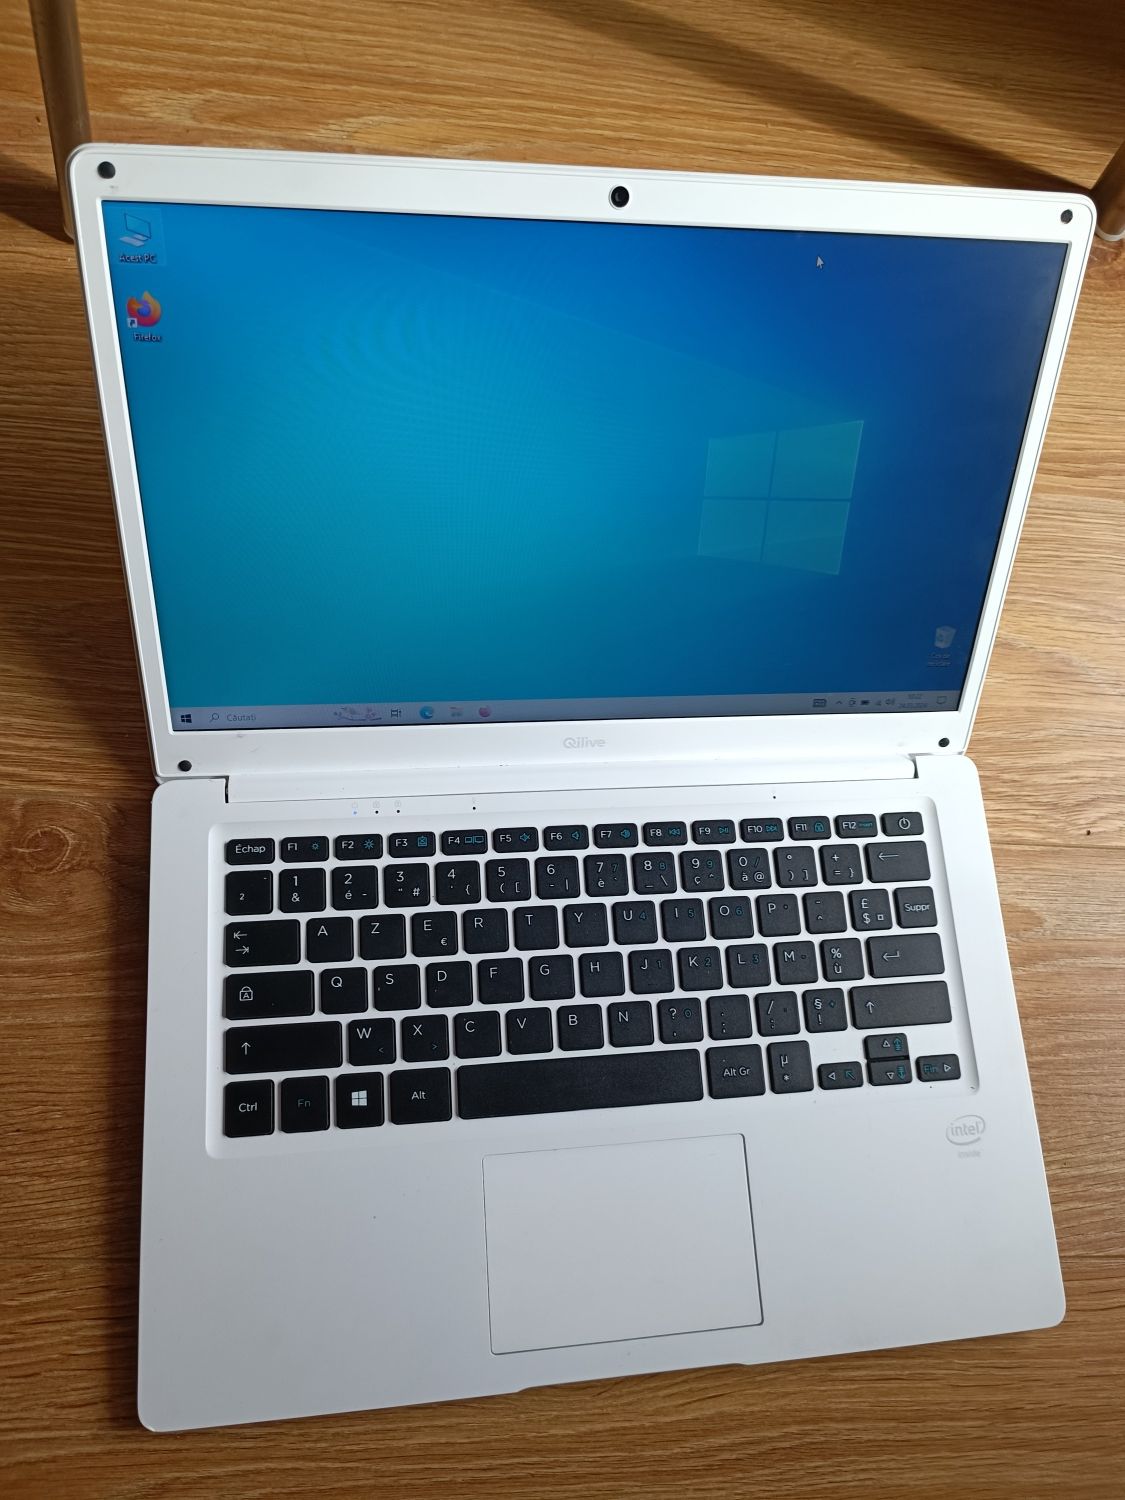 Laptop Qilive 14 inch